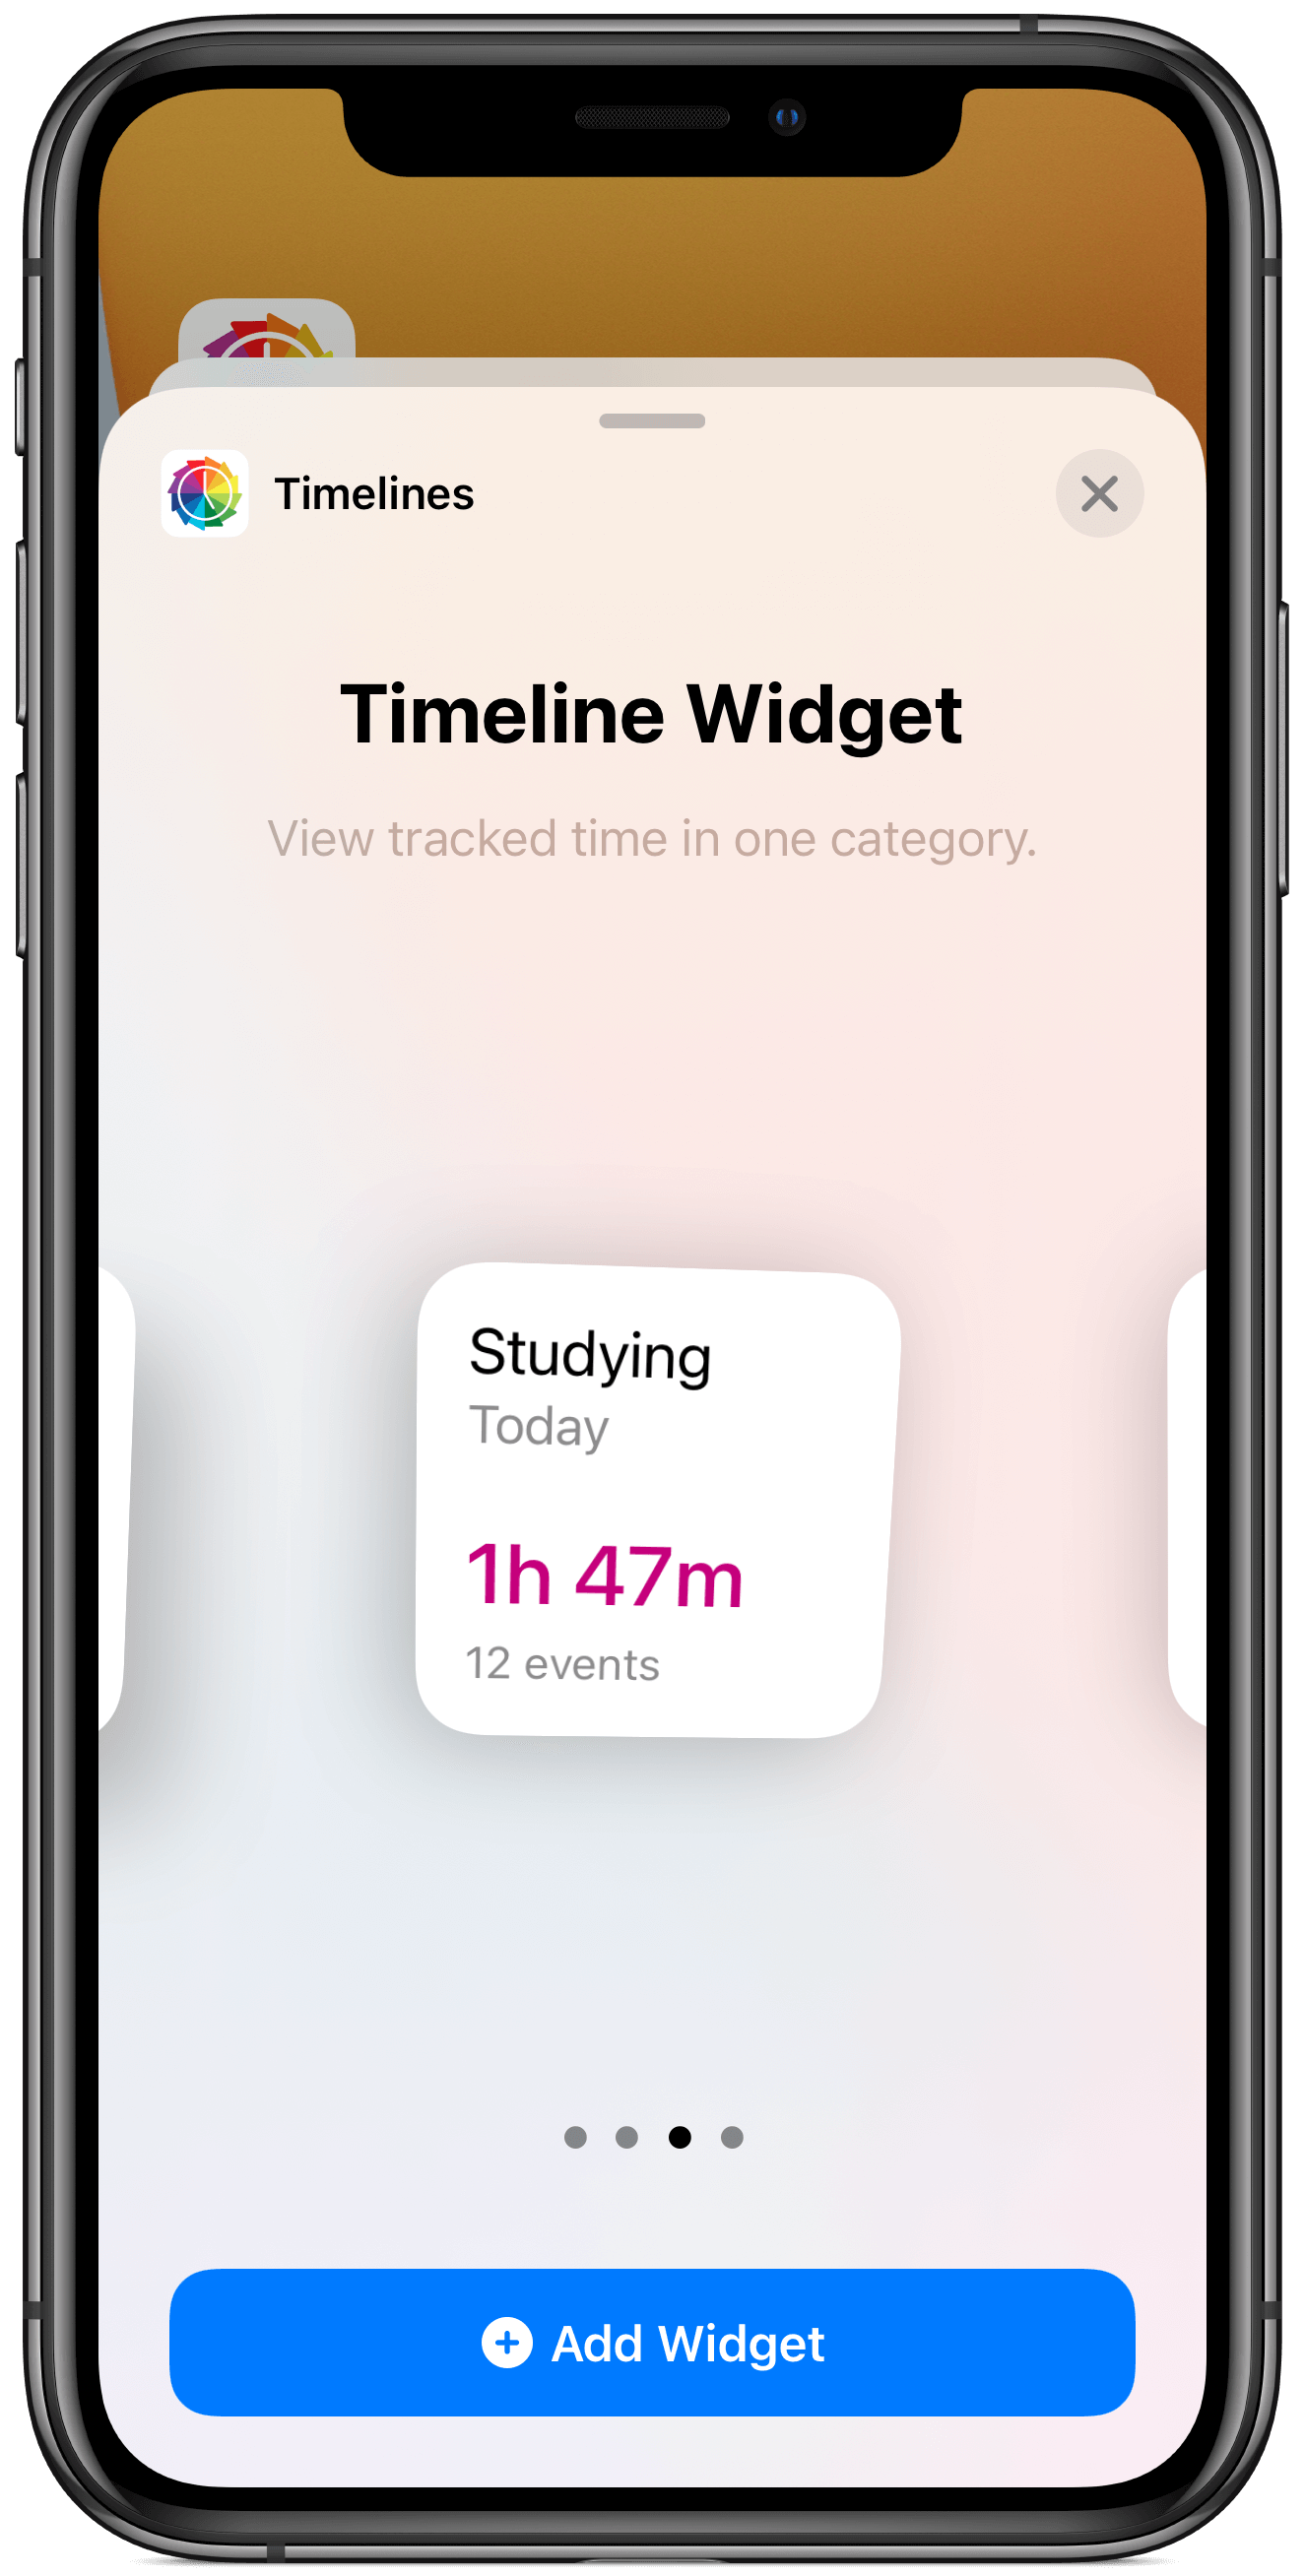 Adding Timeline widget